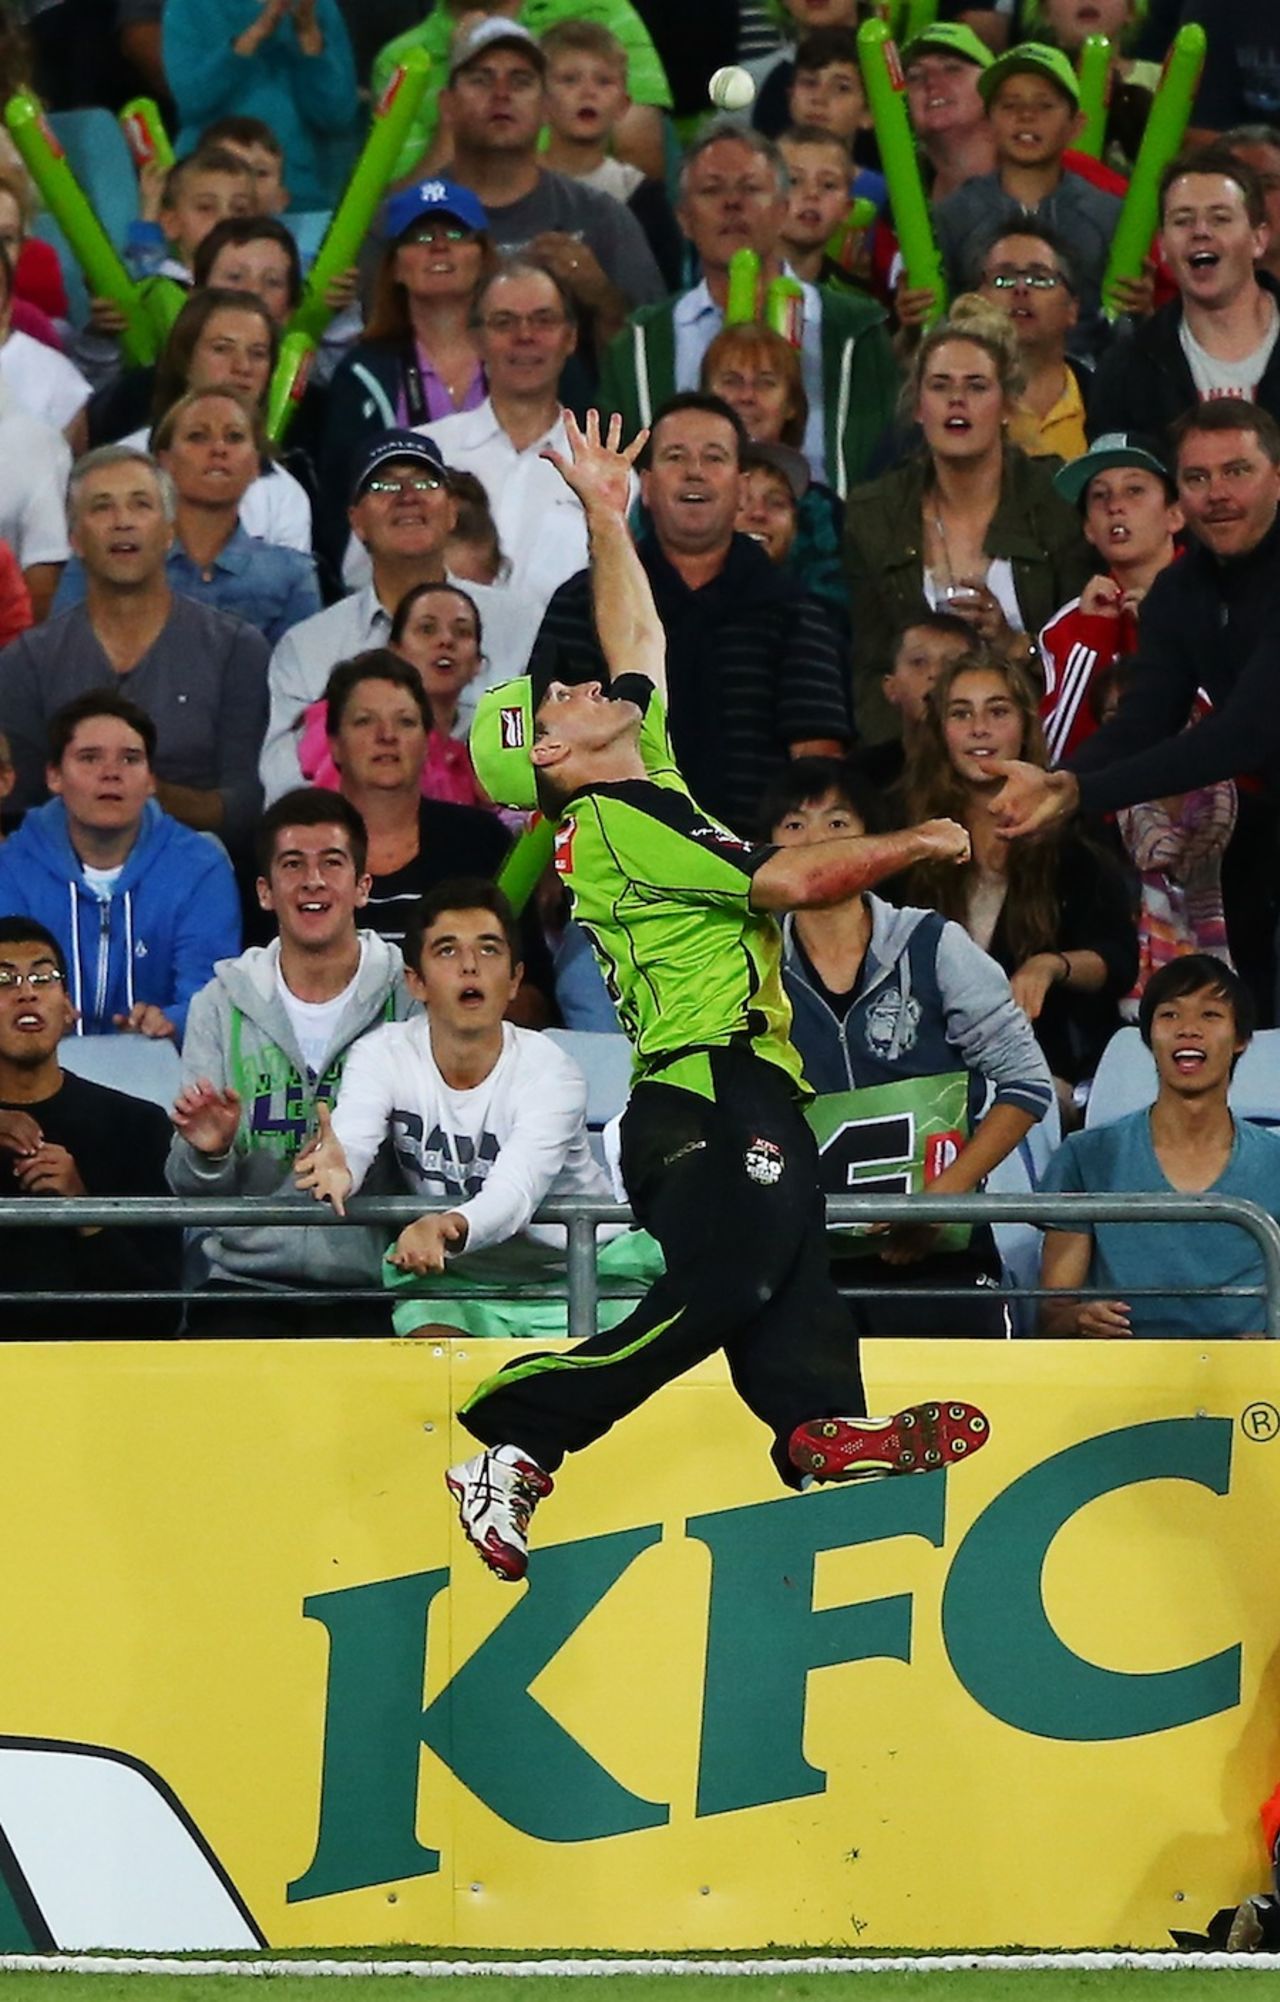 Cameron Borgas jumps in vain to catch the ball, Sydney Thunder v Brisbane Heat, Big Bash League, Sydney, January 8, 2014